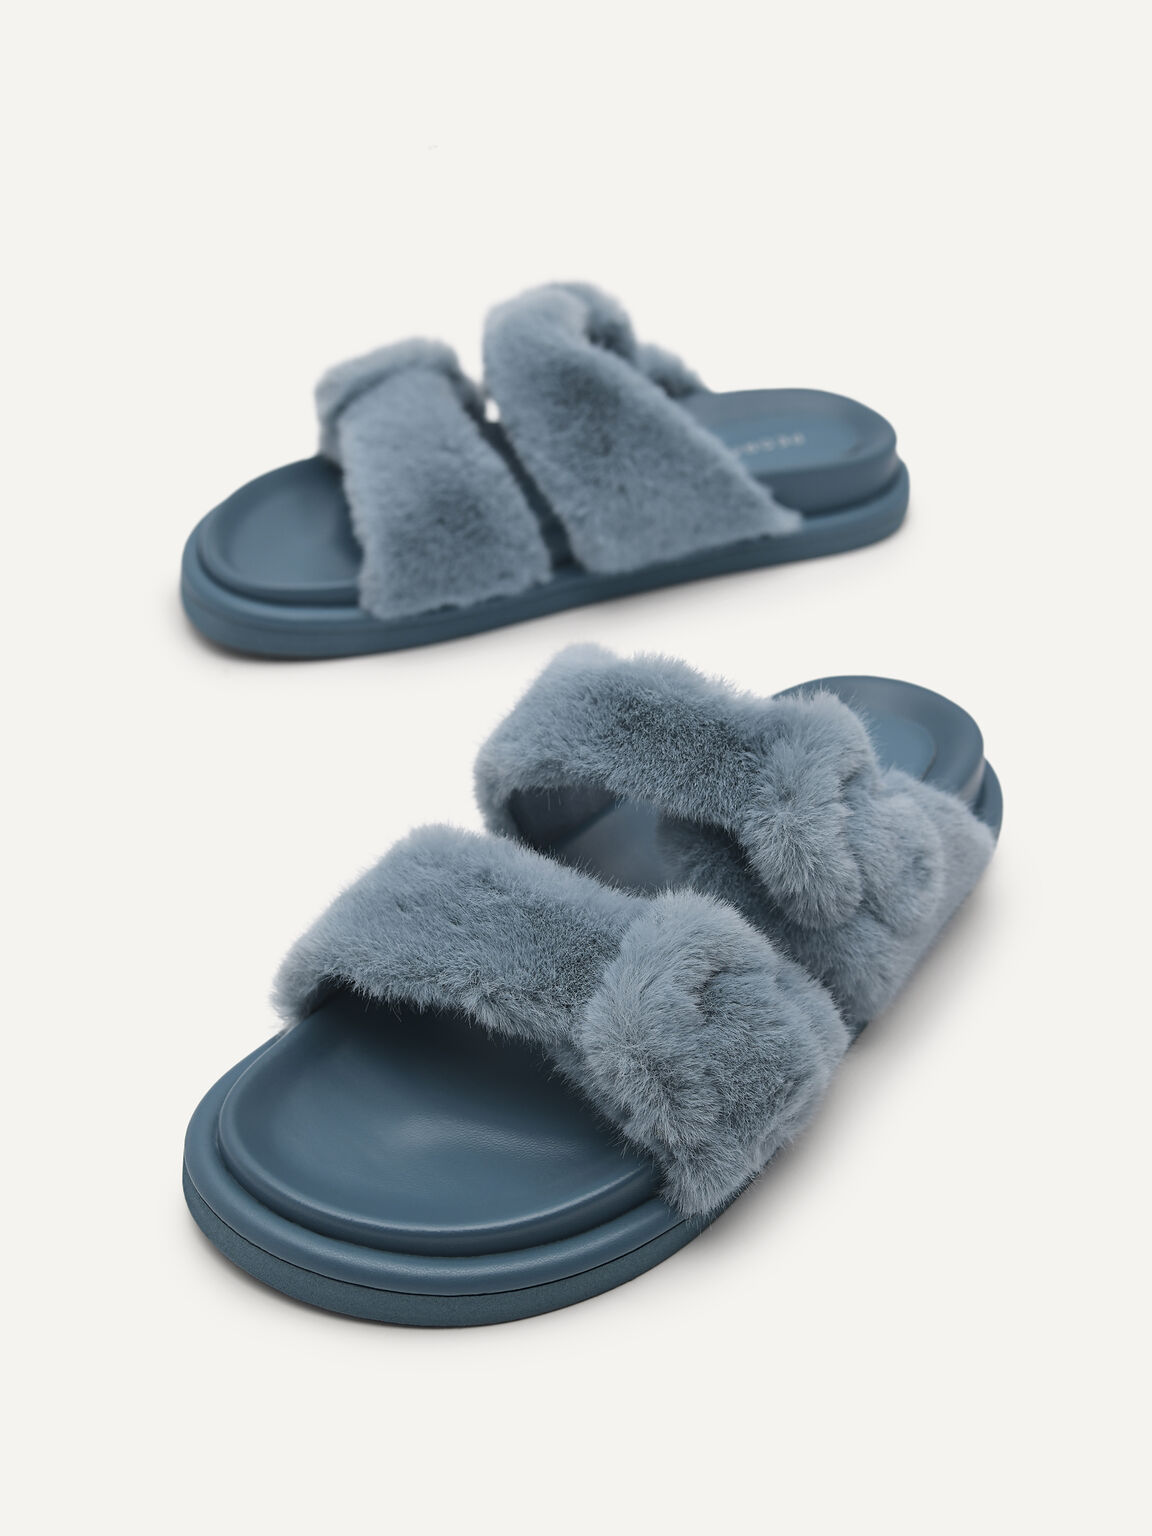 Valenki Flat Sports Sandals, Turquoise